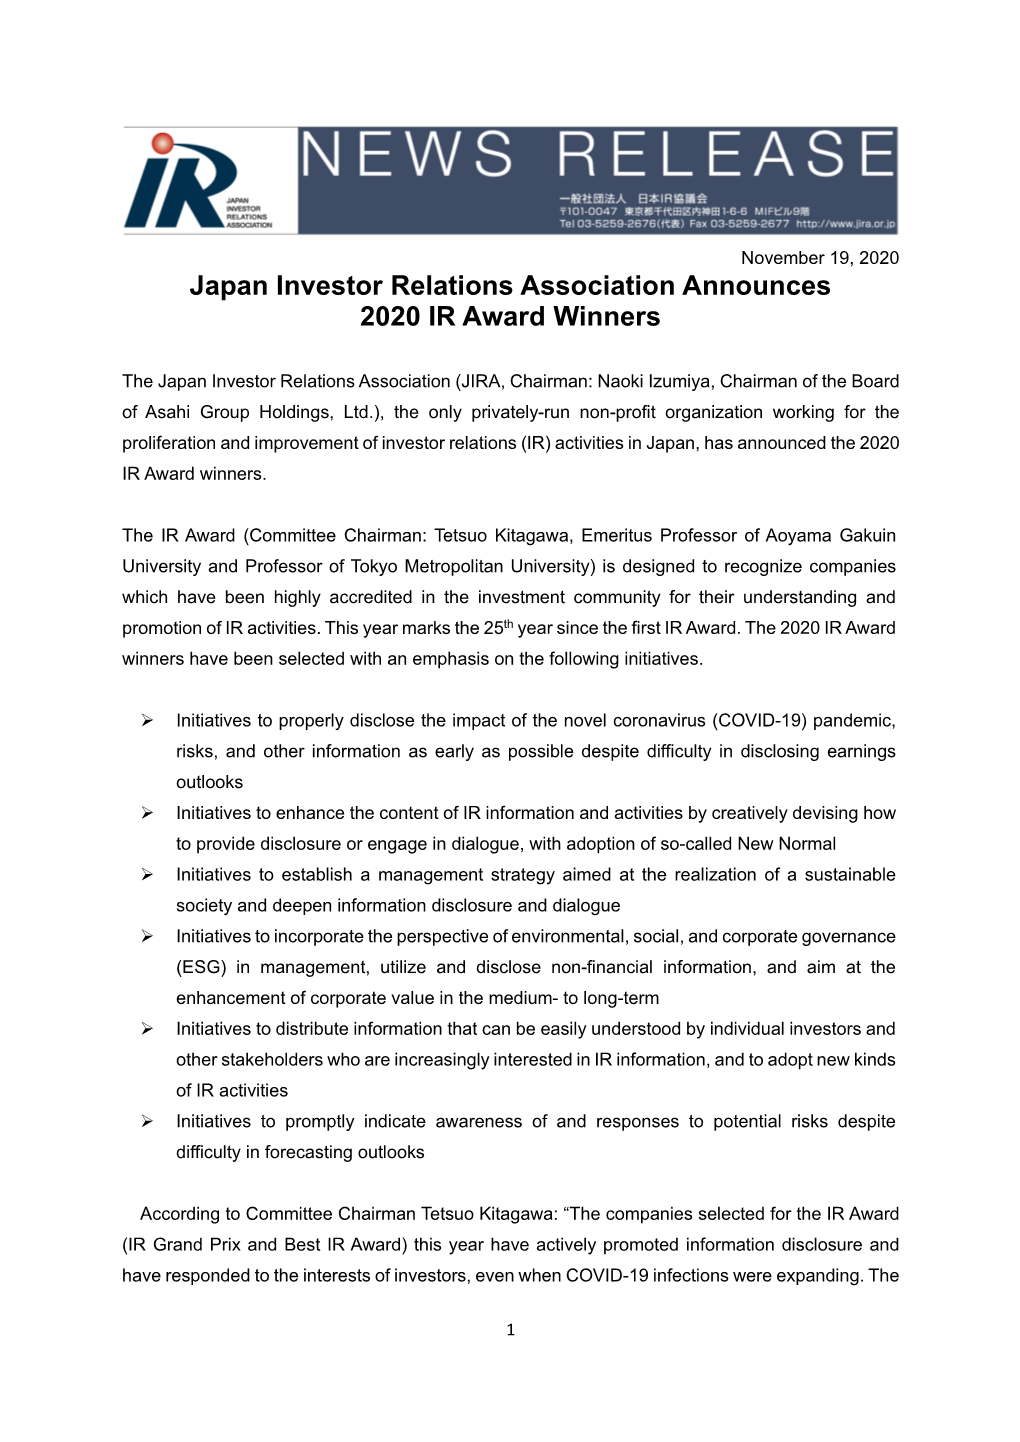 Japan Investor Relations Association Announces 2020 IR Award Winners